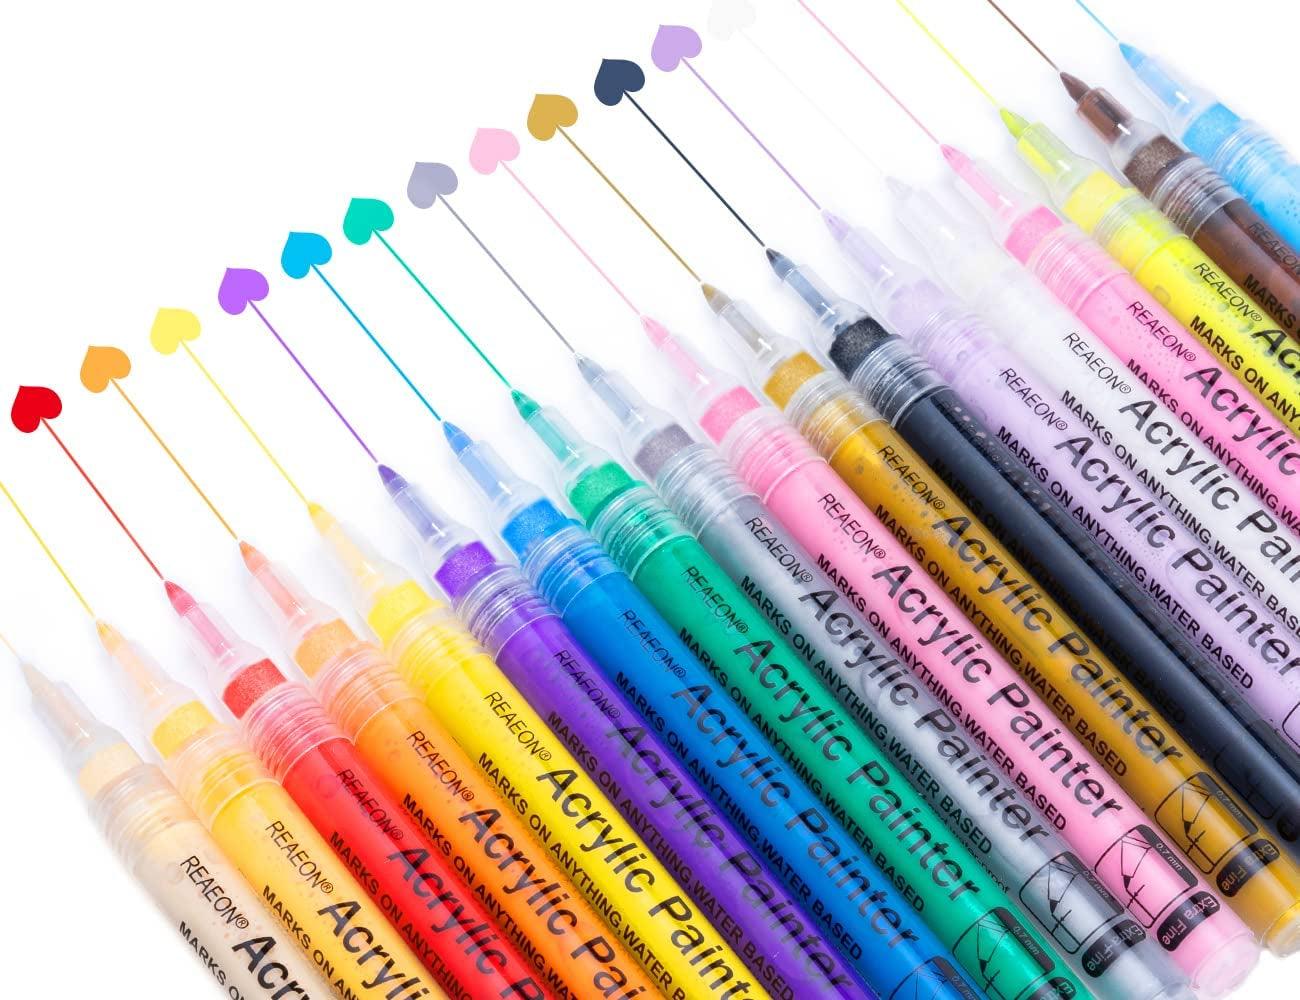 Acrylic Paint Pens, 24 Colors Dual Tip Brush Paint Markers